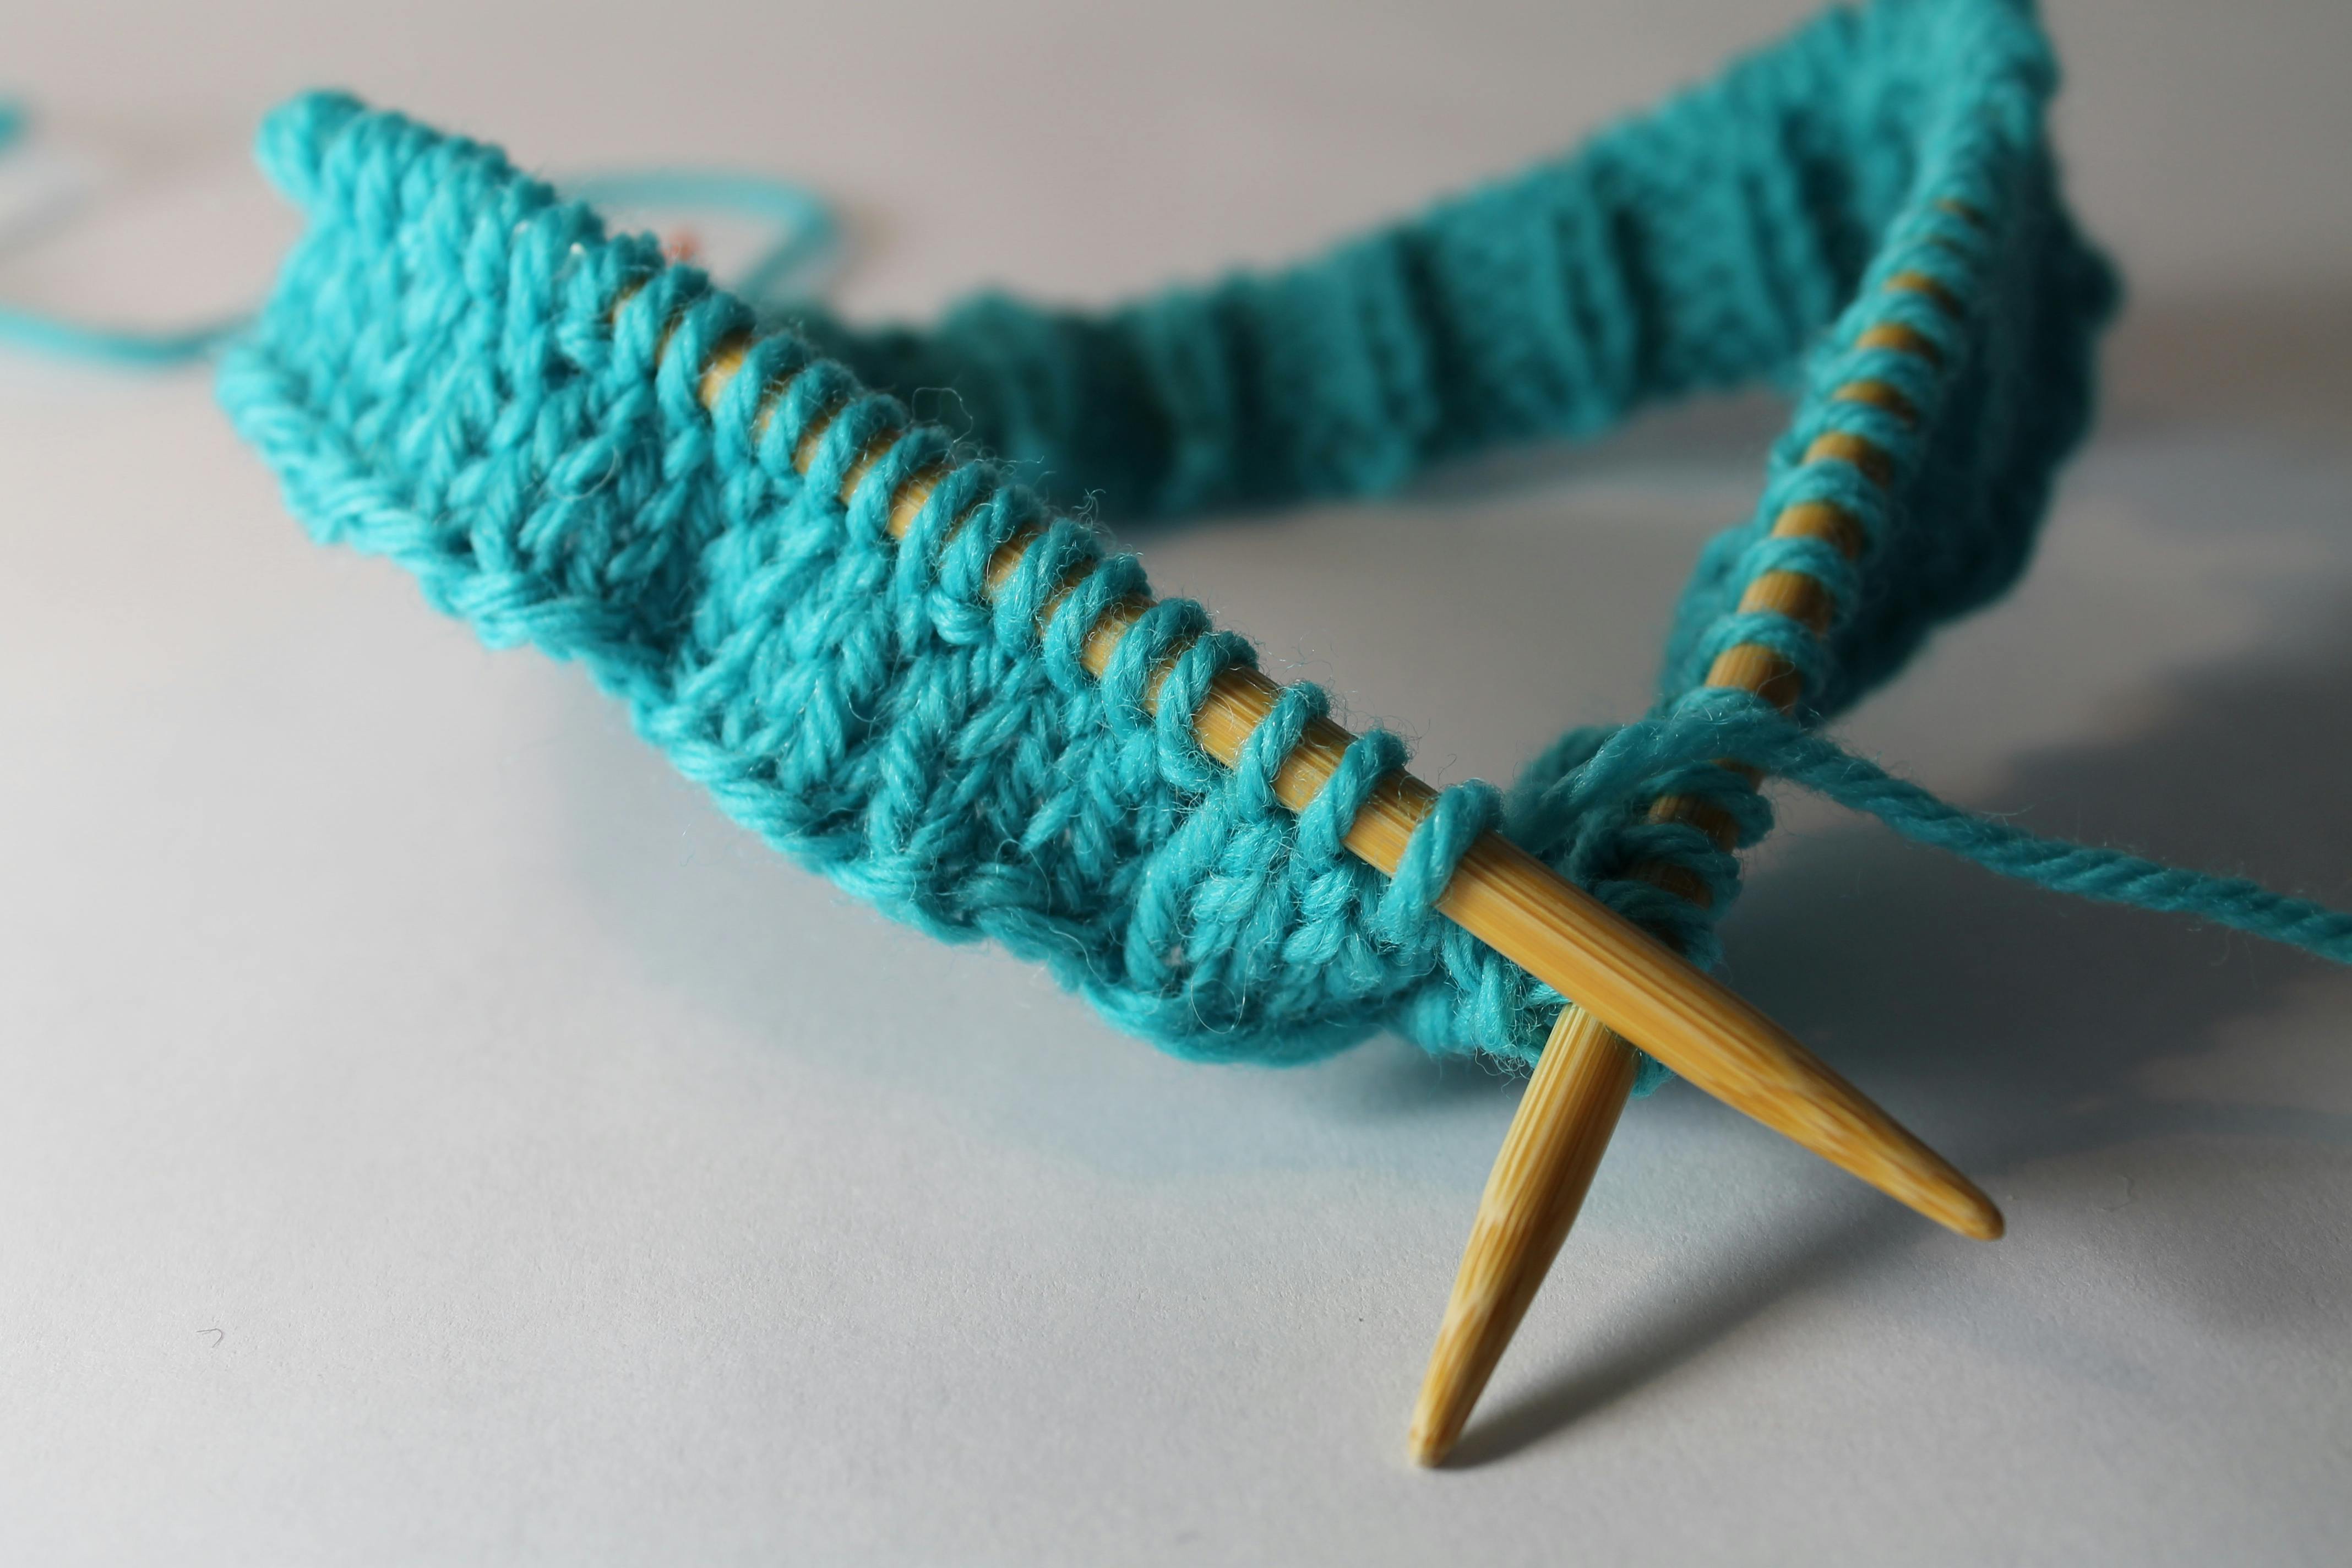 knitting needles and turquoise yarn